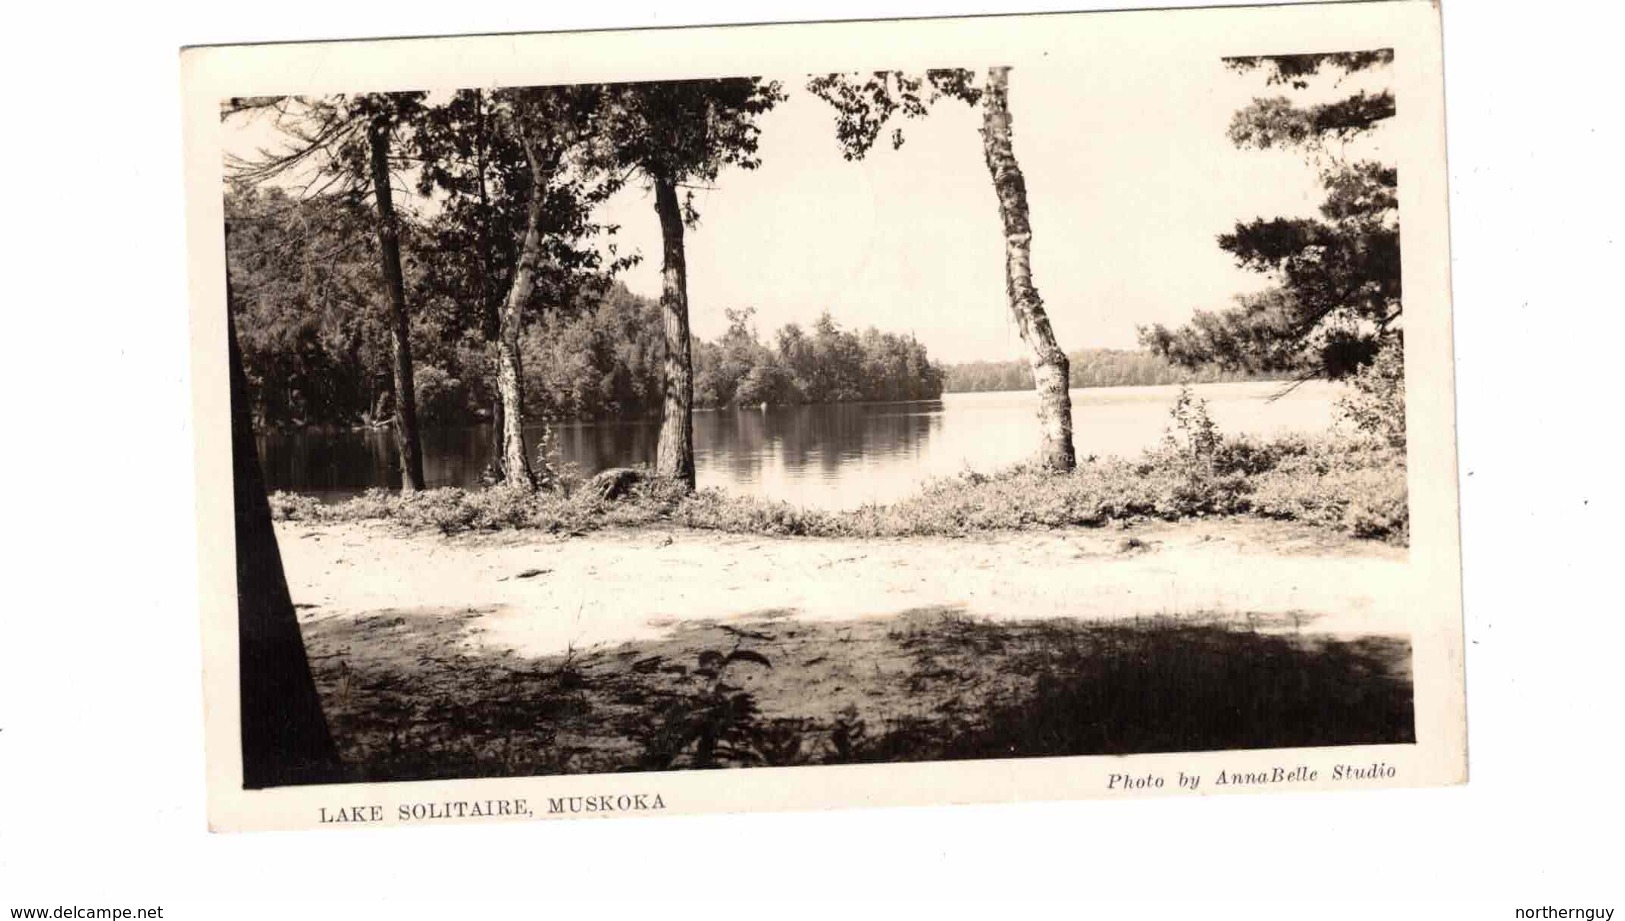 Muskoka, Ontario, Canada, Lake Solitaire, Old Road, 1945 Real Photo  AnnaBelle Postcard, Muskoka County - Muskoka